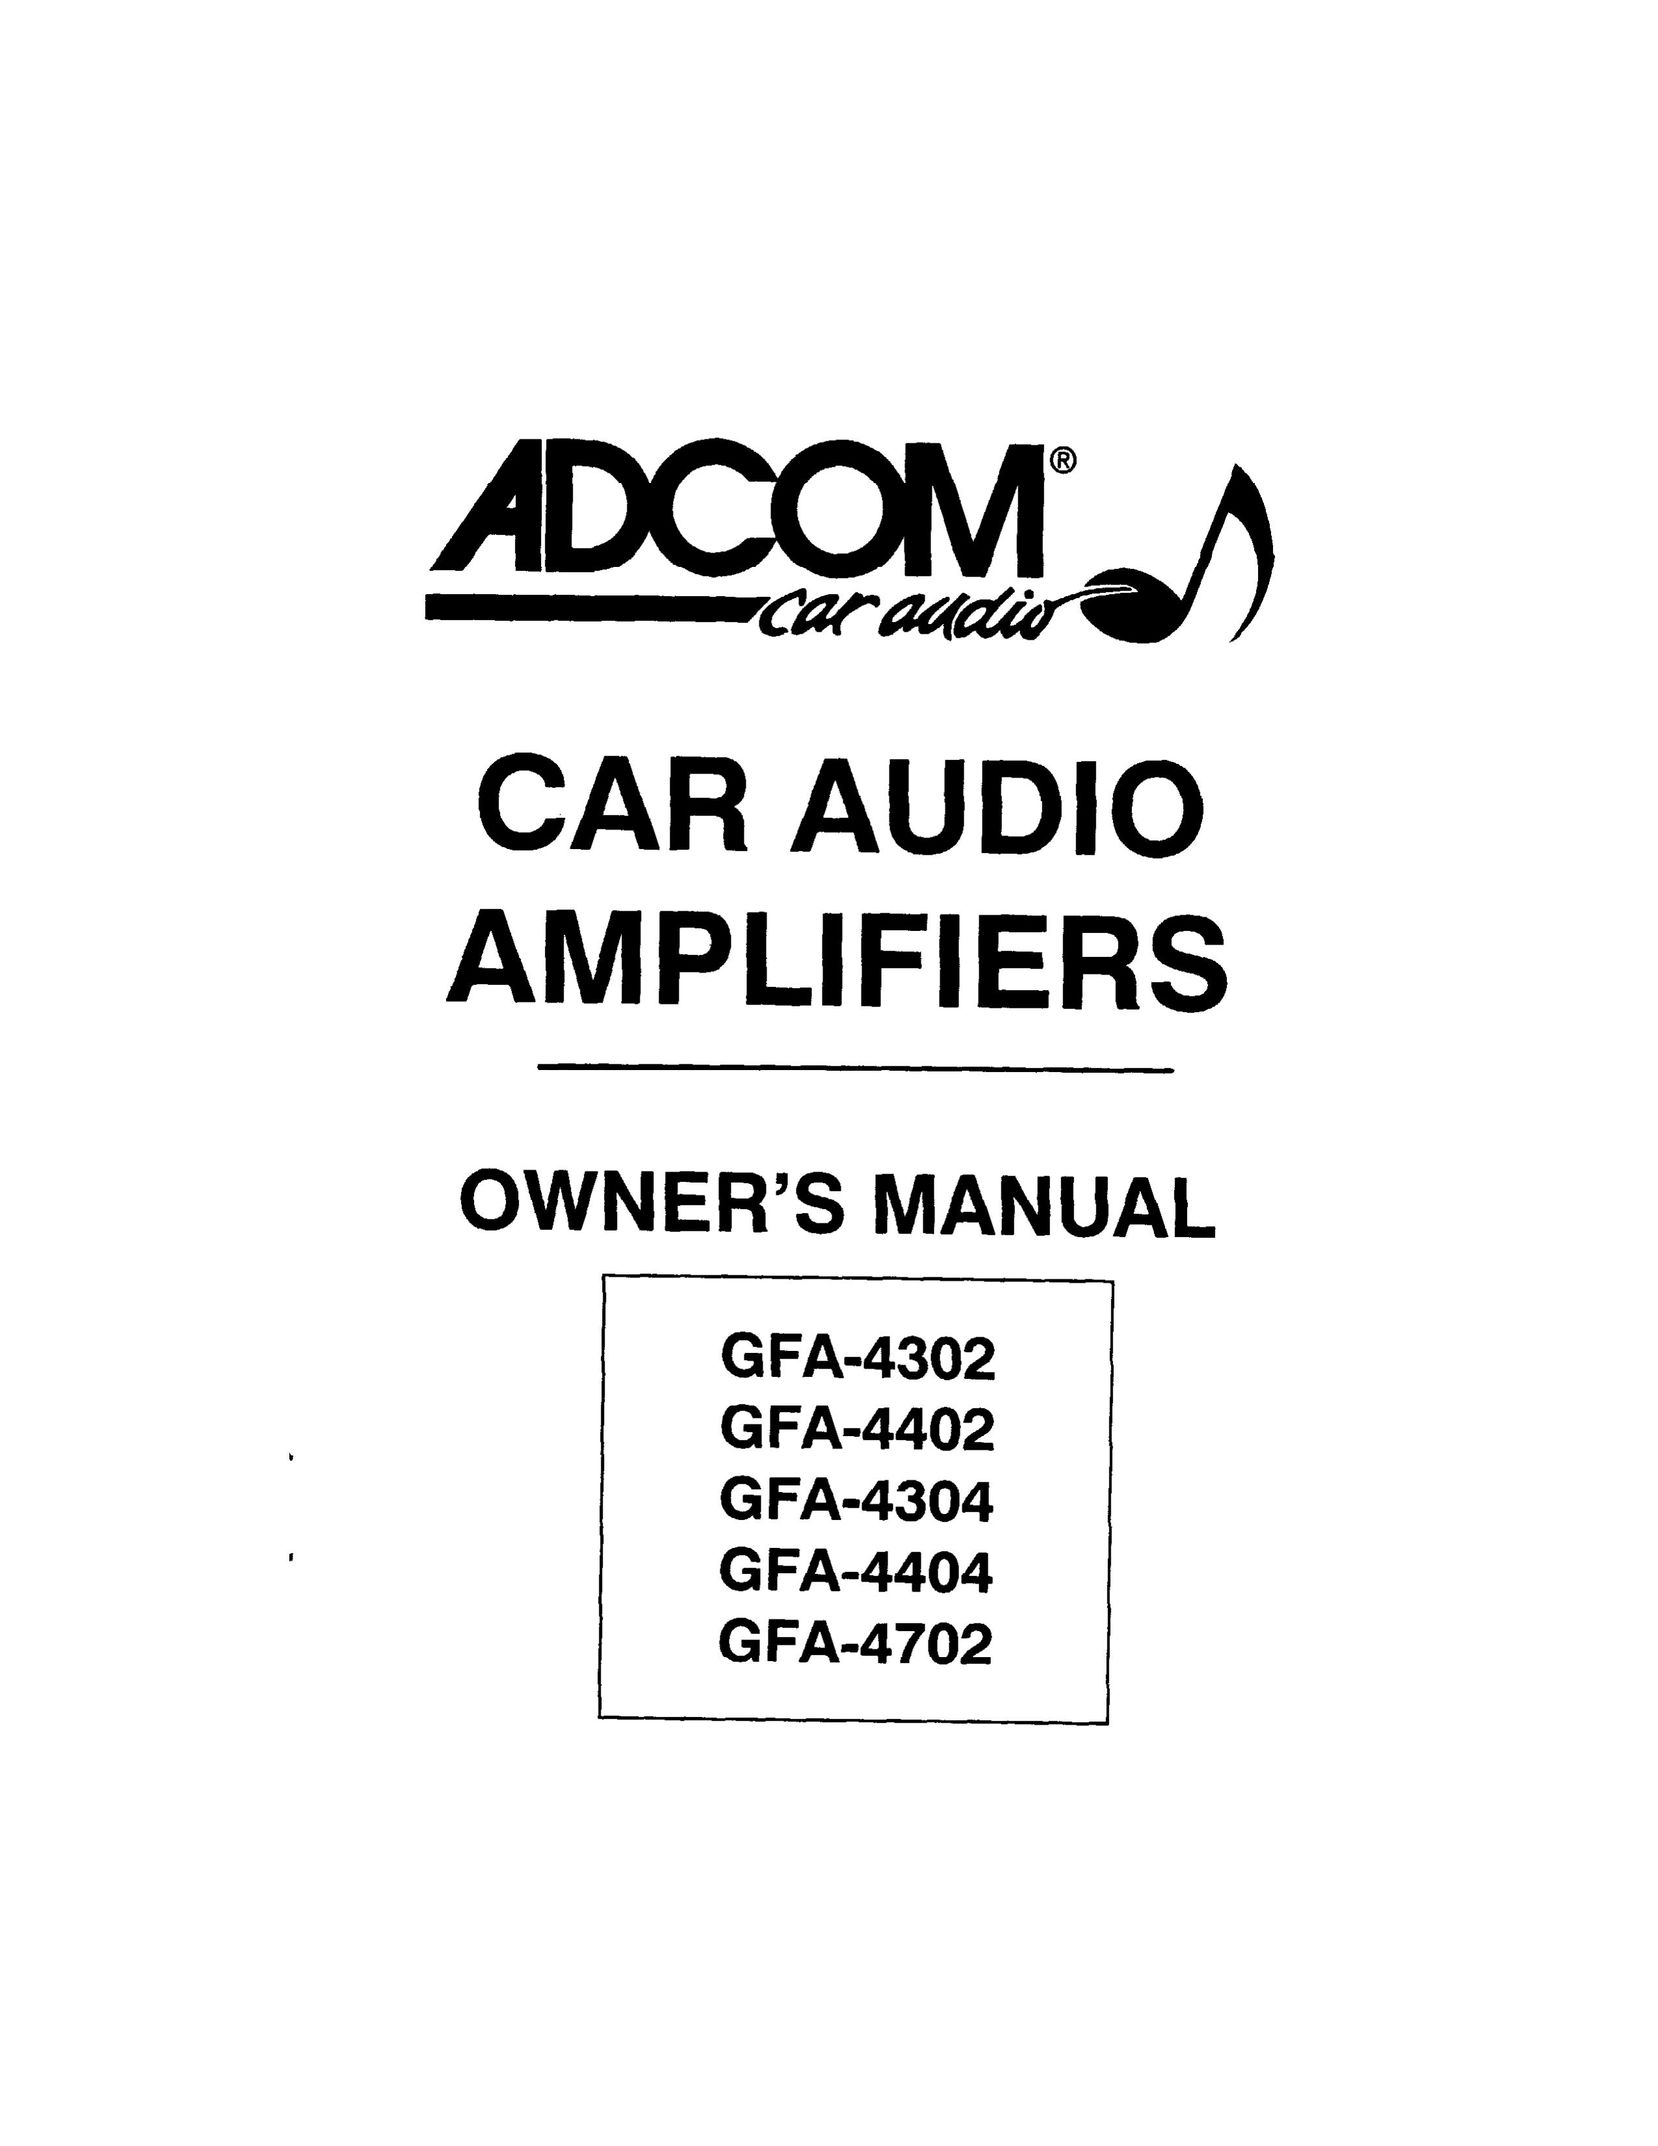 Adcom GFA-4702 Car Amplifier User Manual